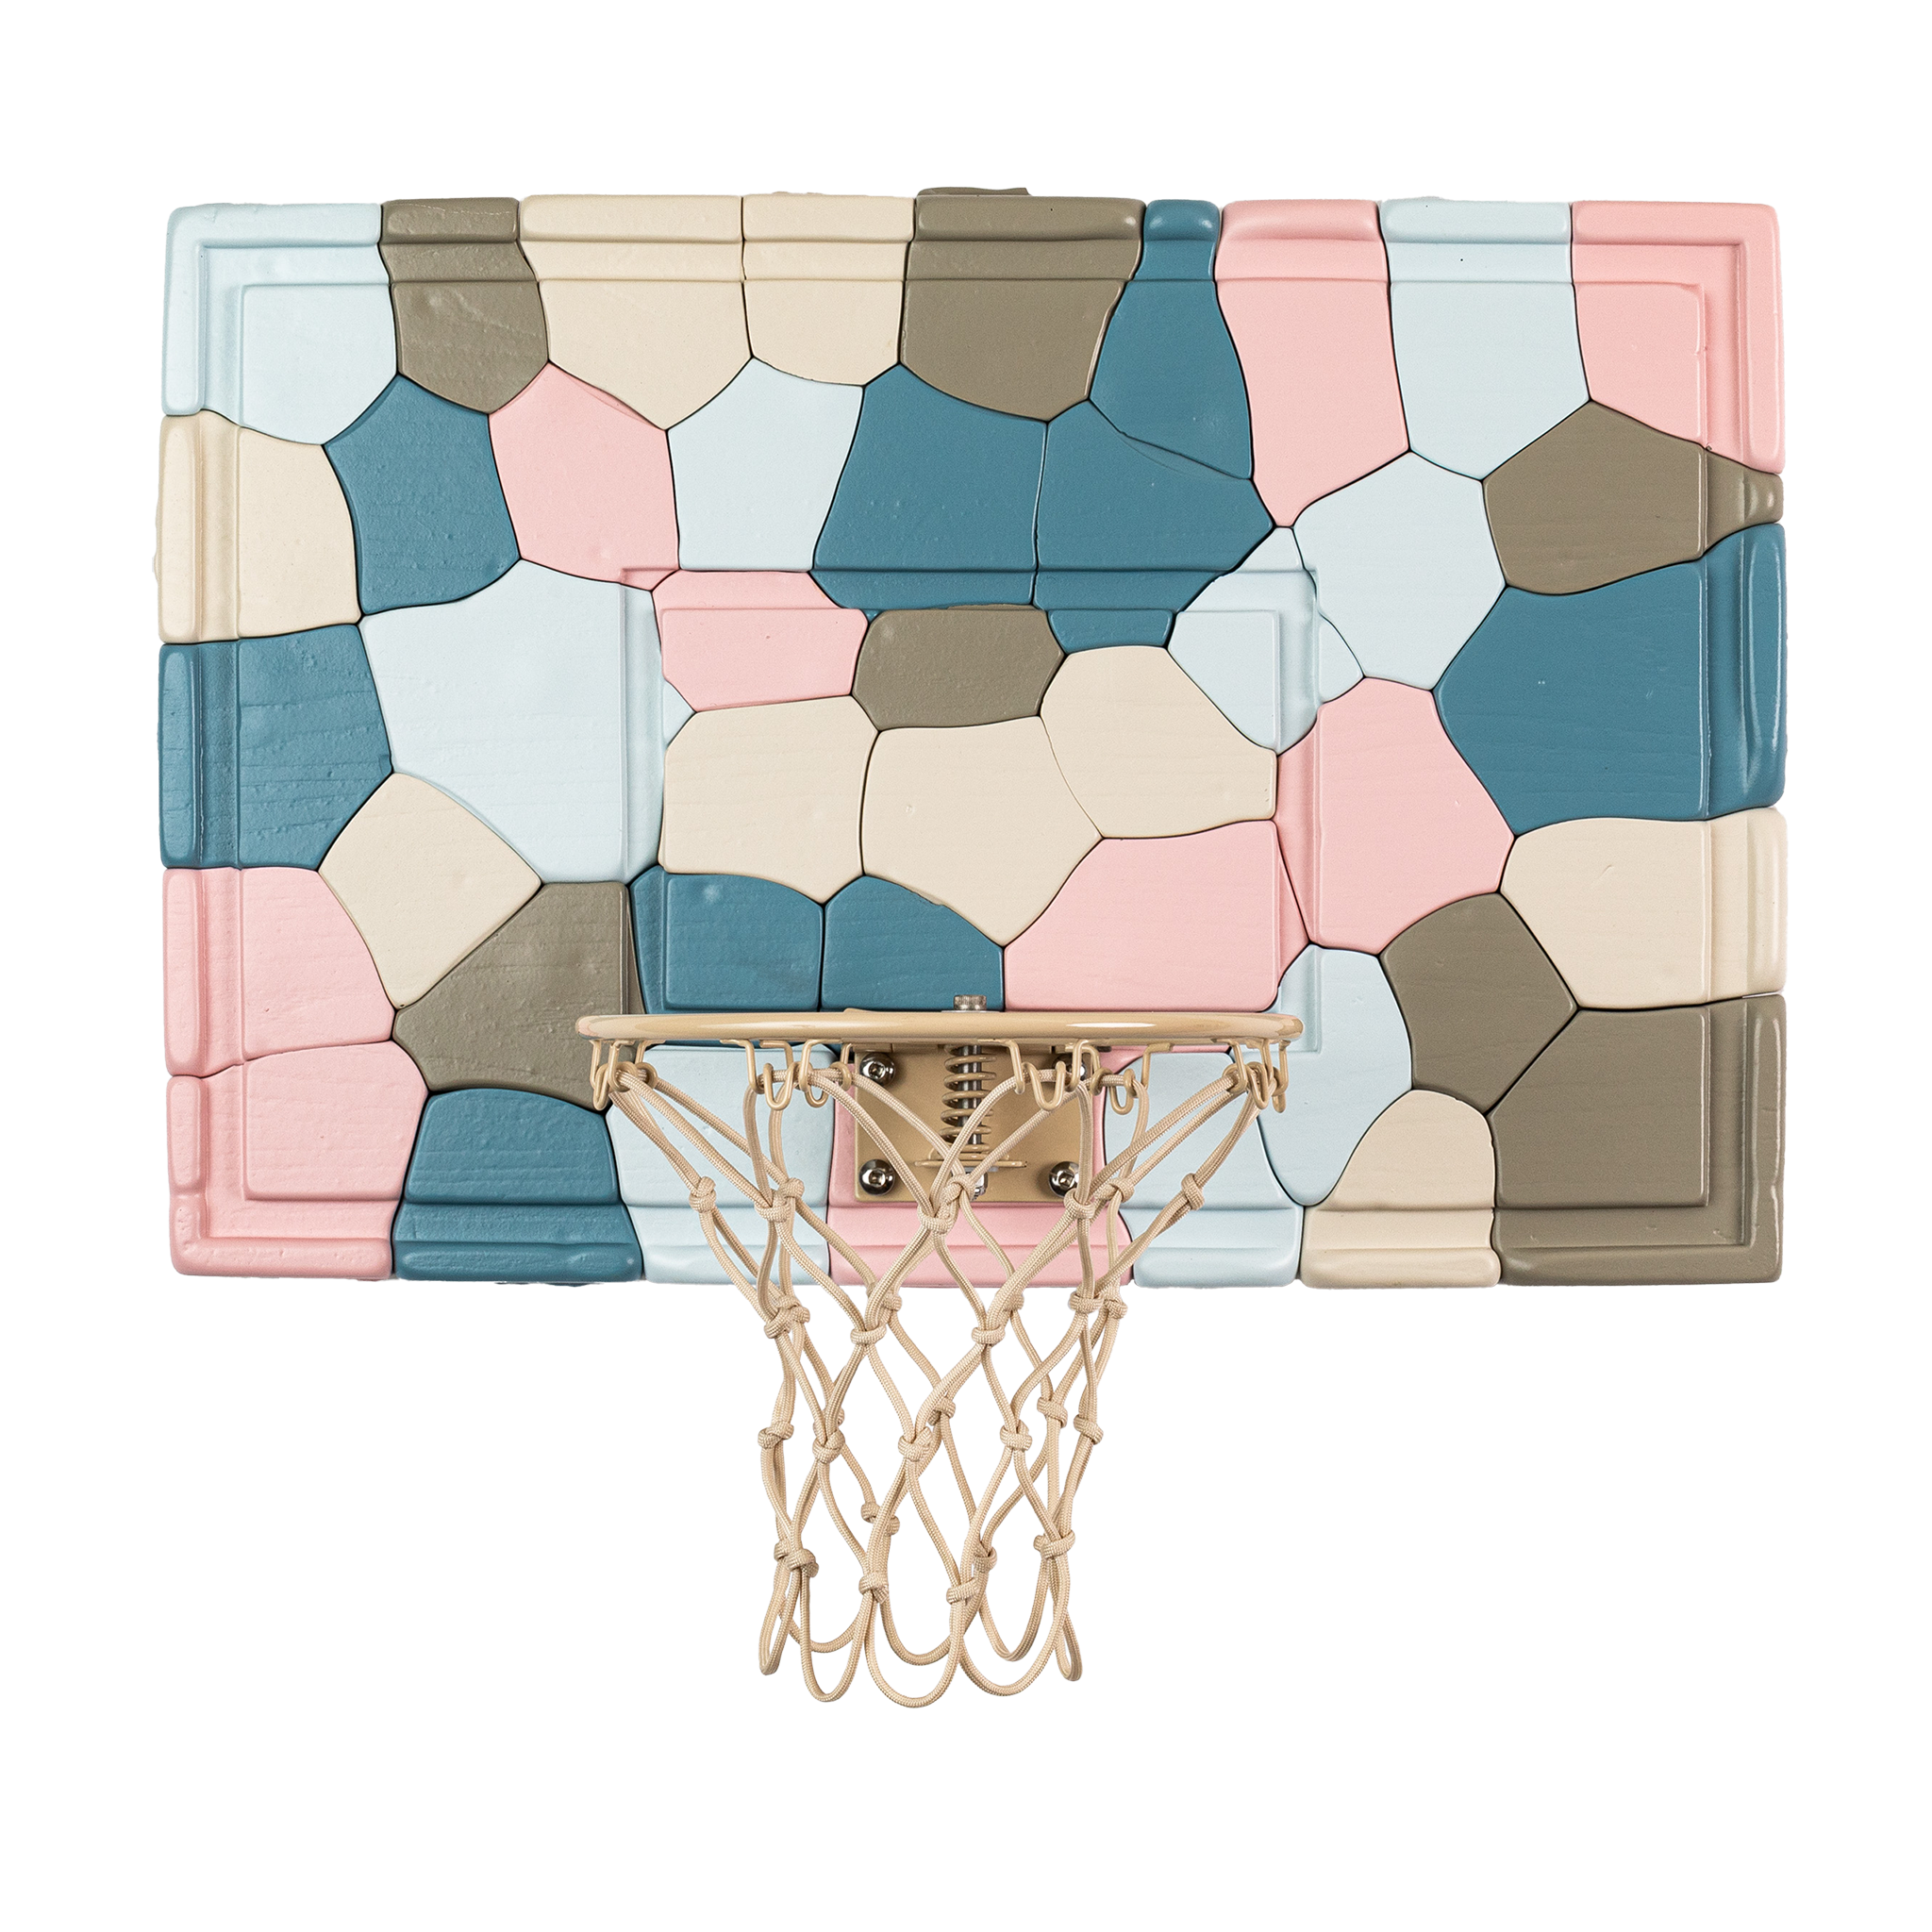 Wall mounted mini basketball hoop